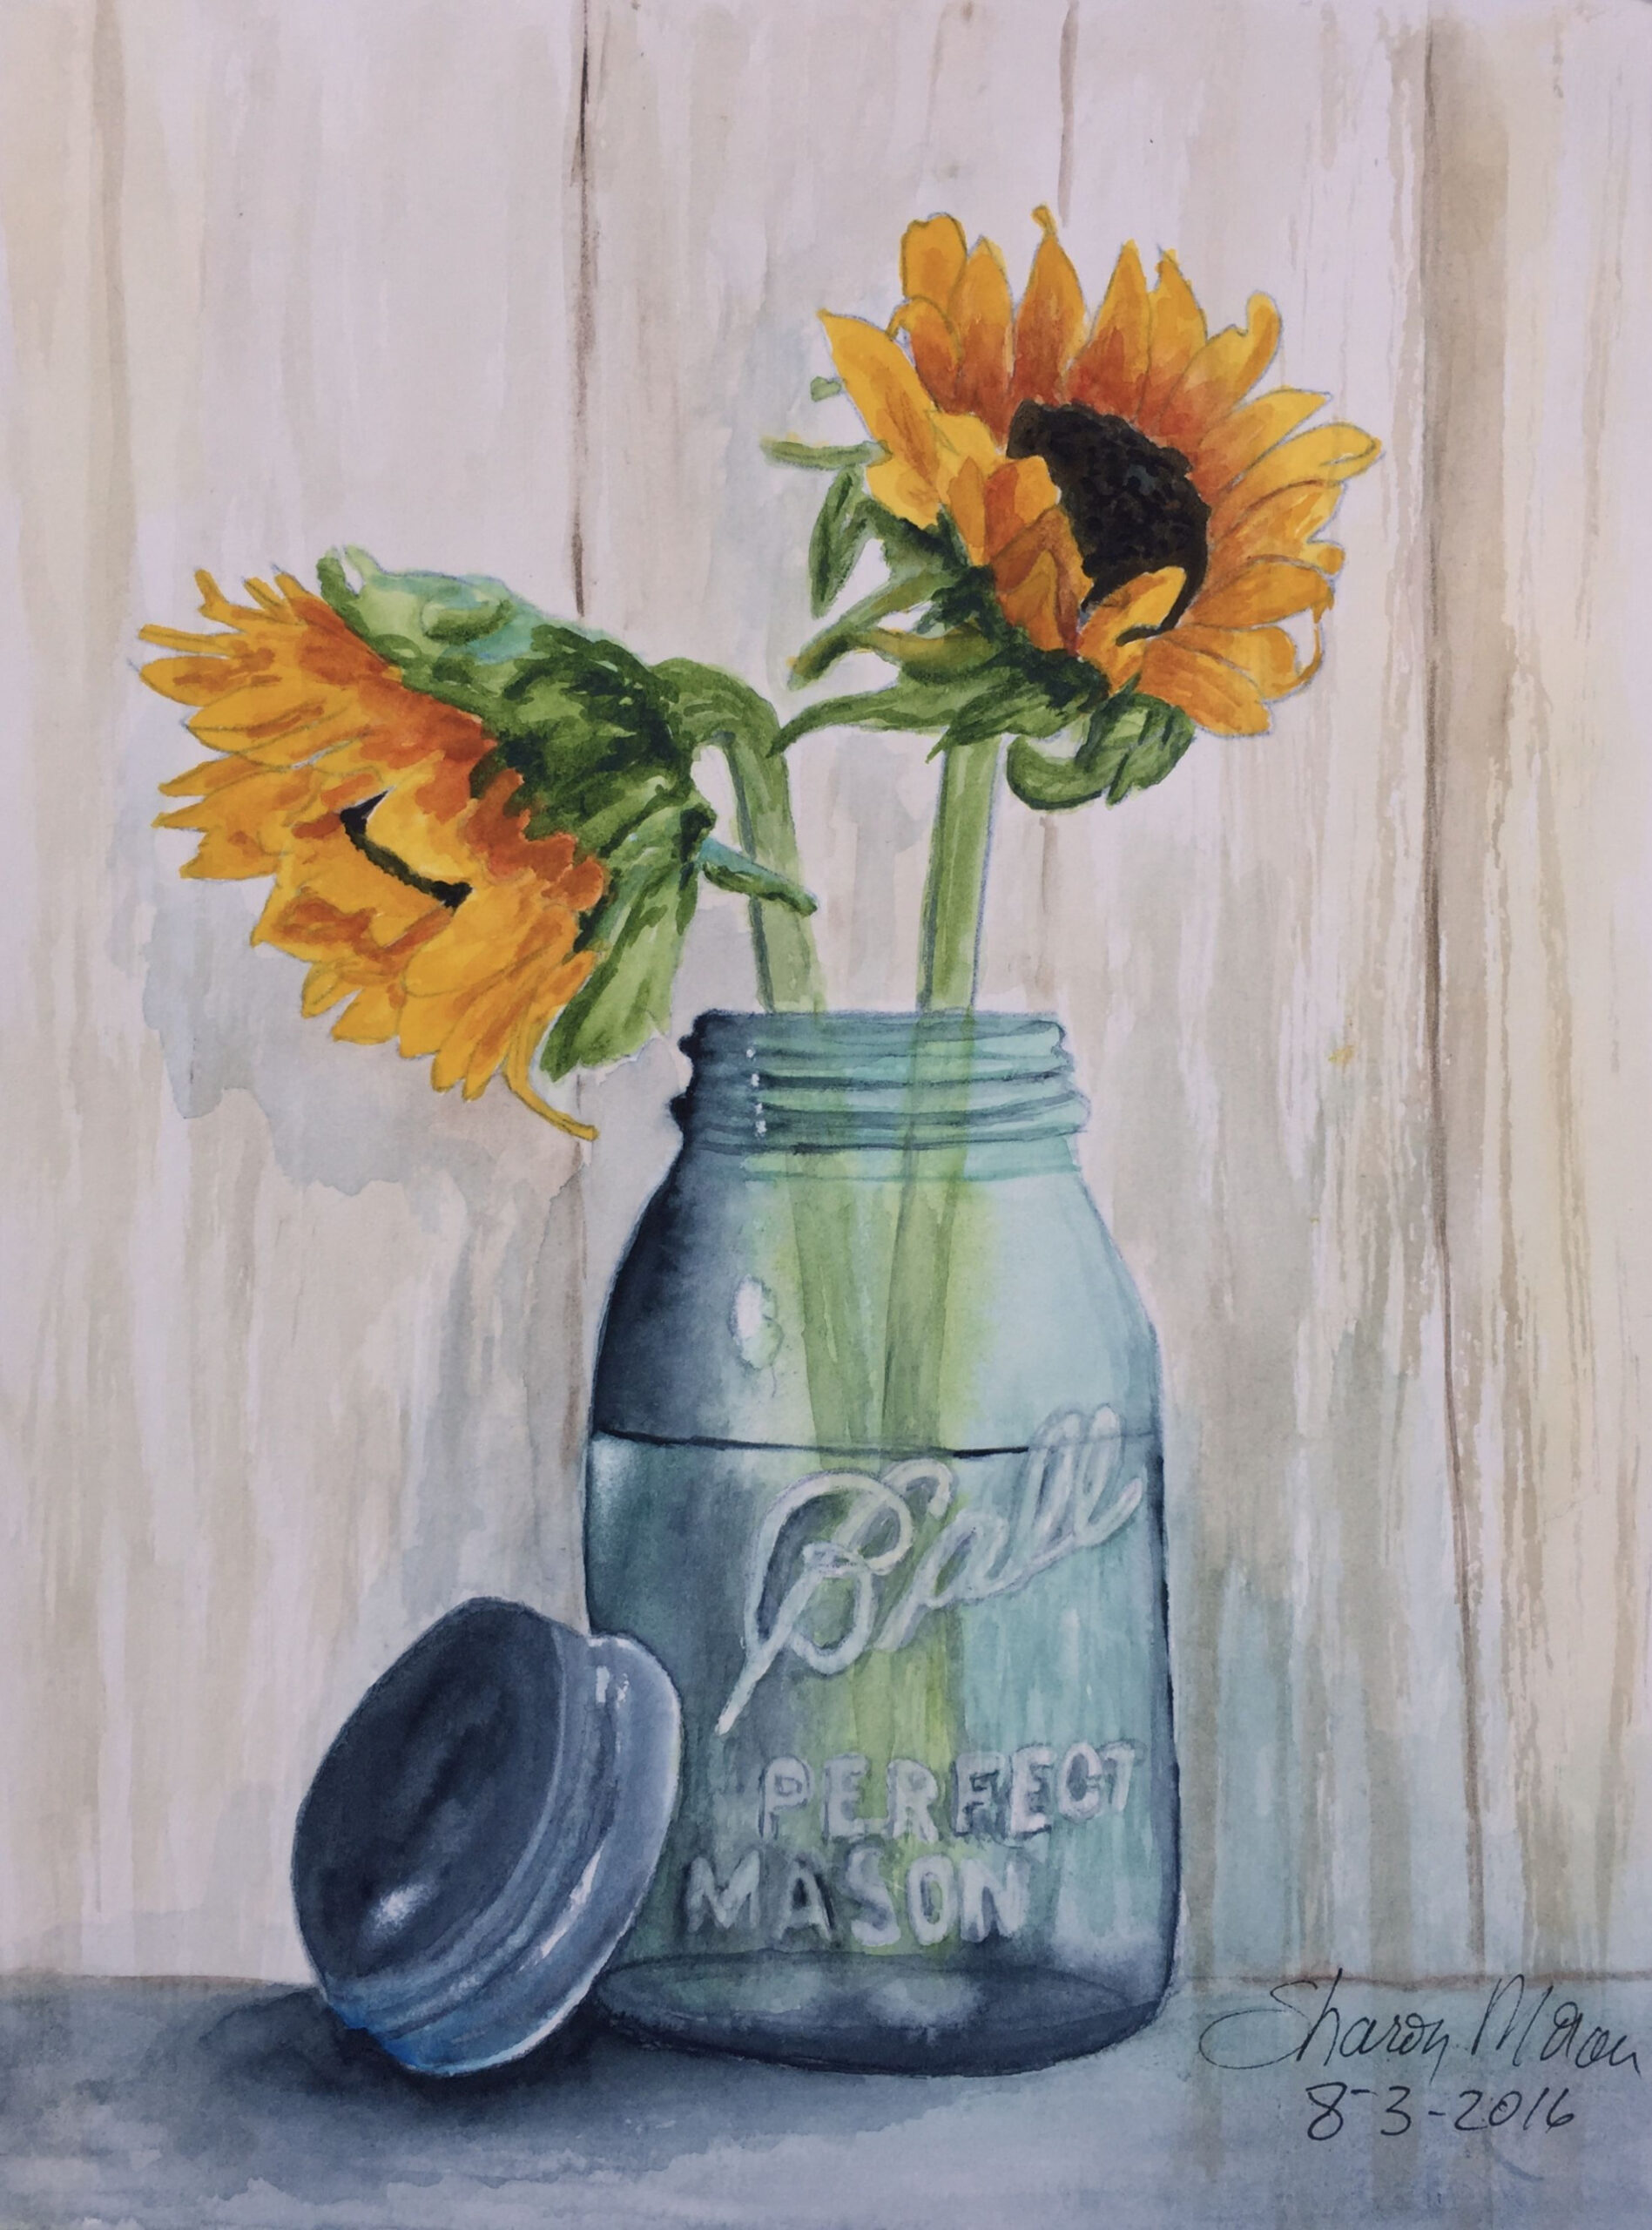 Sunflowers in a Mason jar, original watercolor by Sharon Moran,